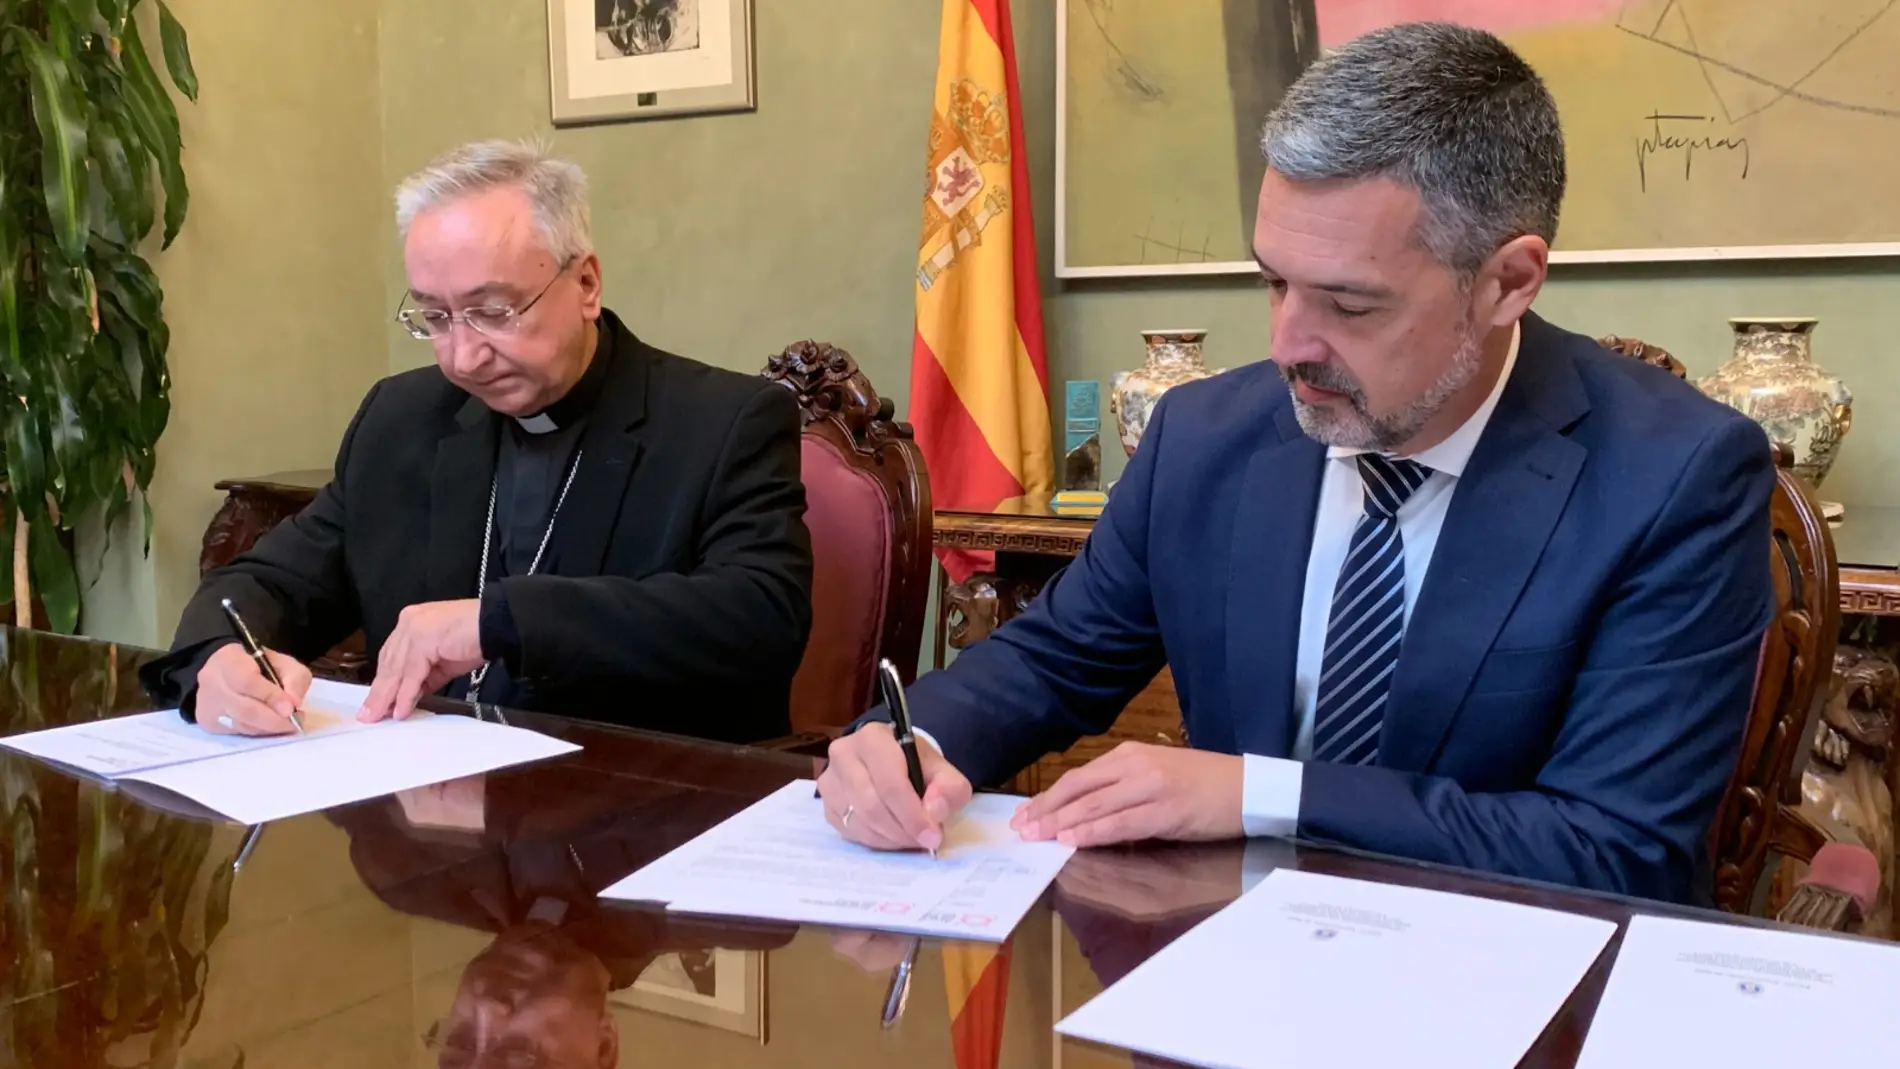 El obispo de Cádiz y el alcalde de Rota